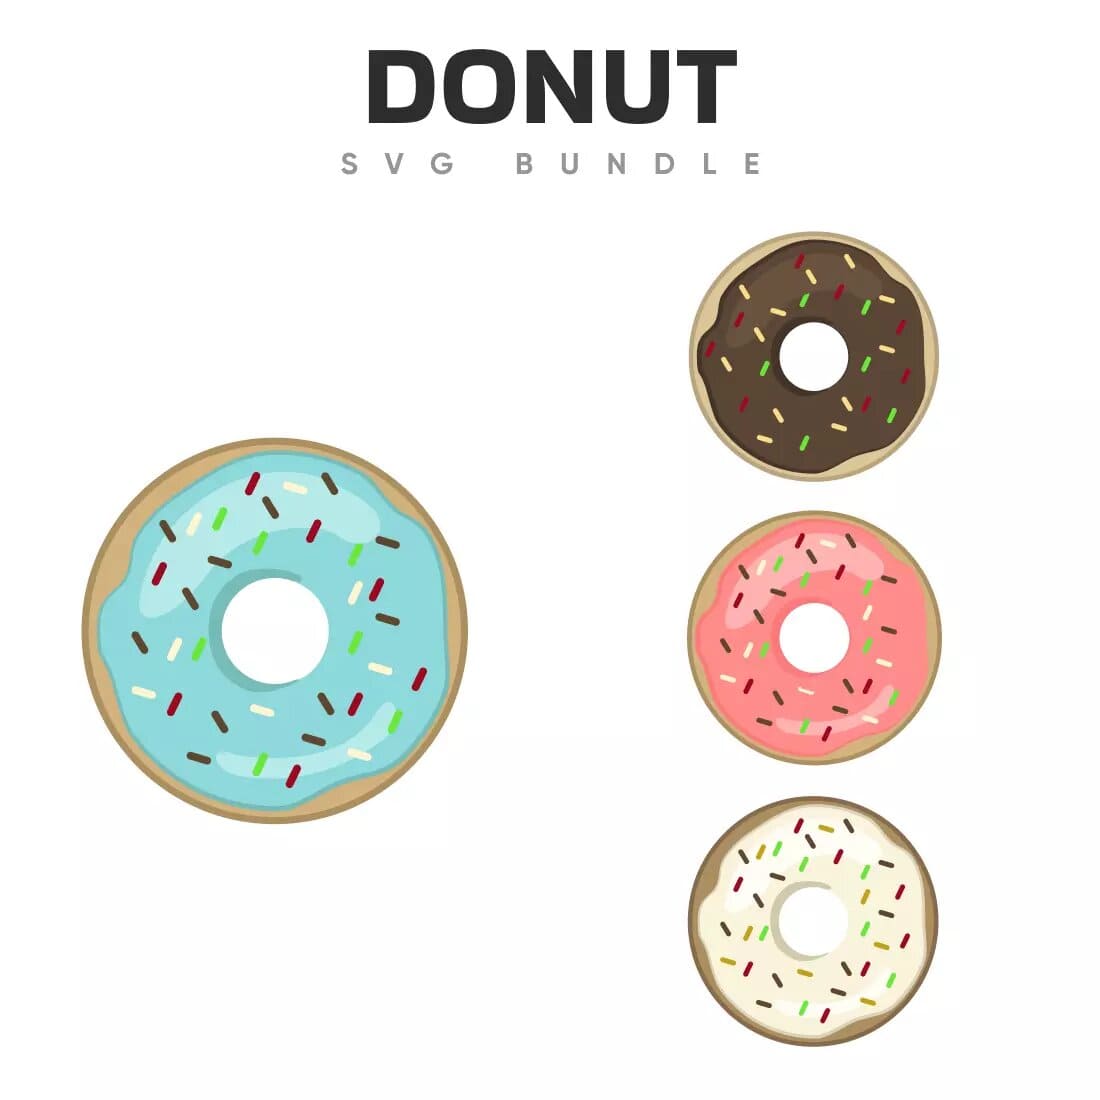 Donut SVG Bundle Preview 2.